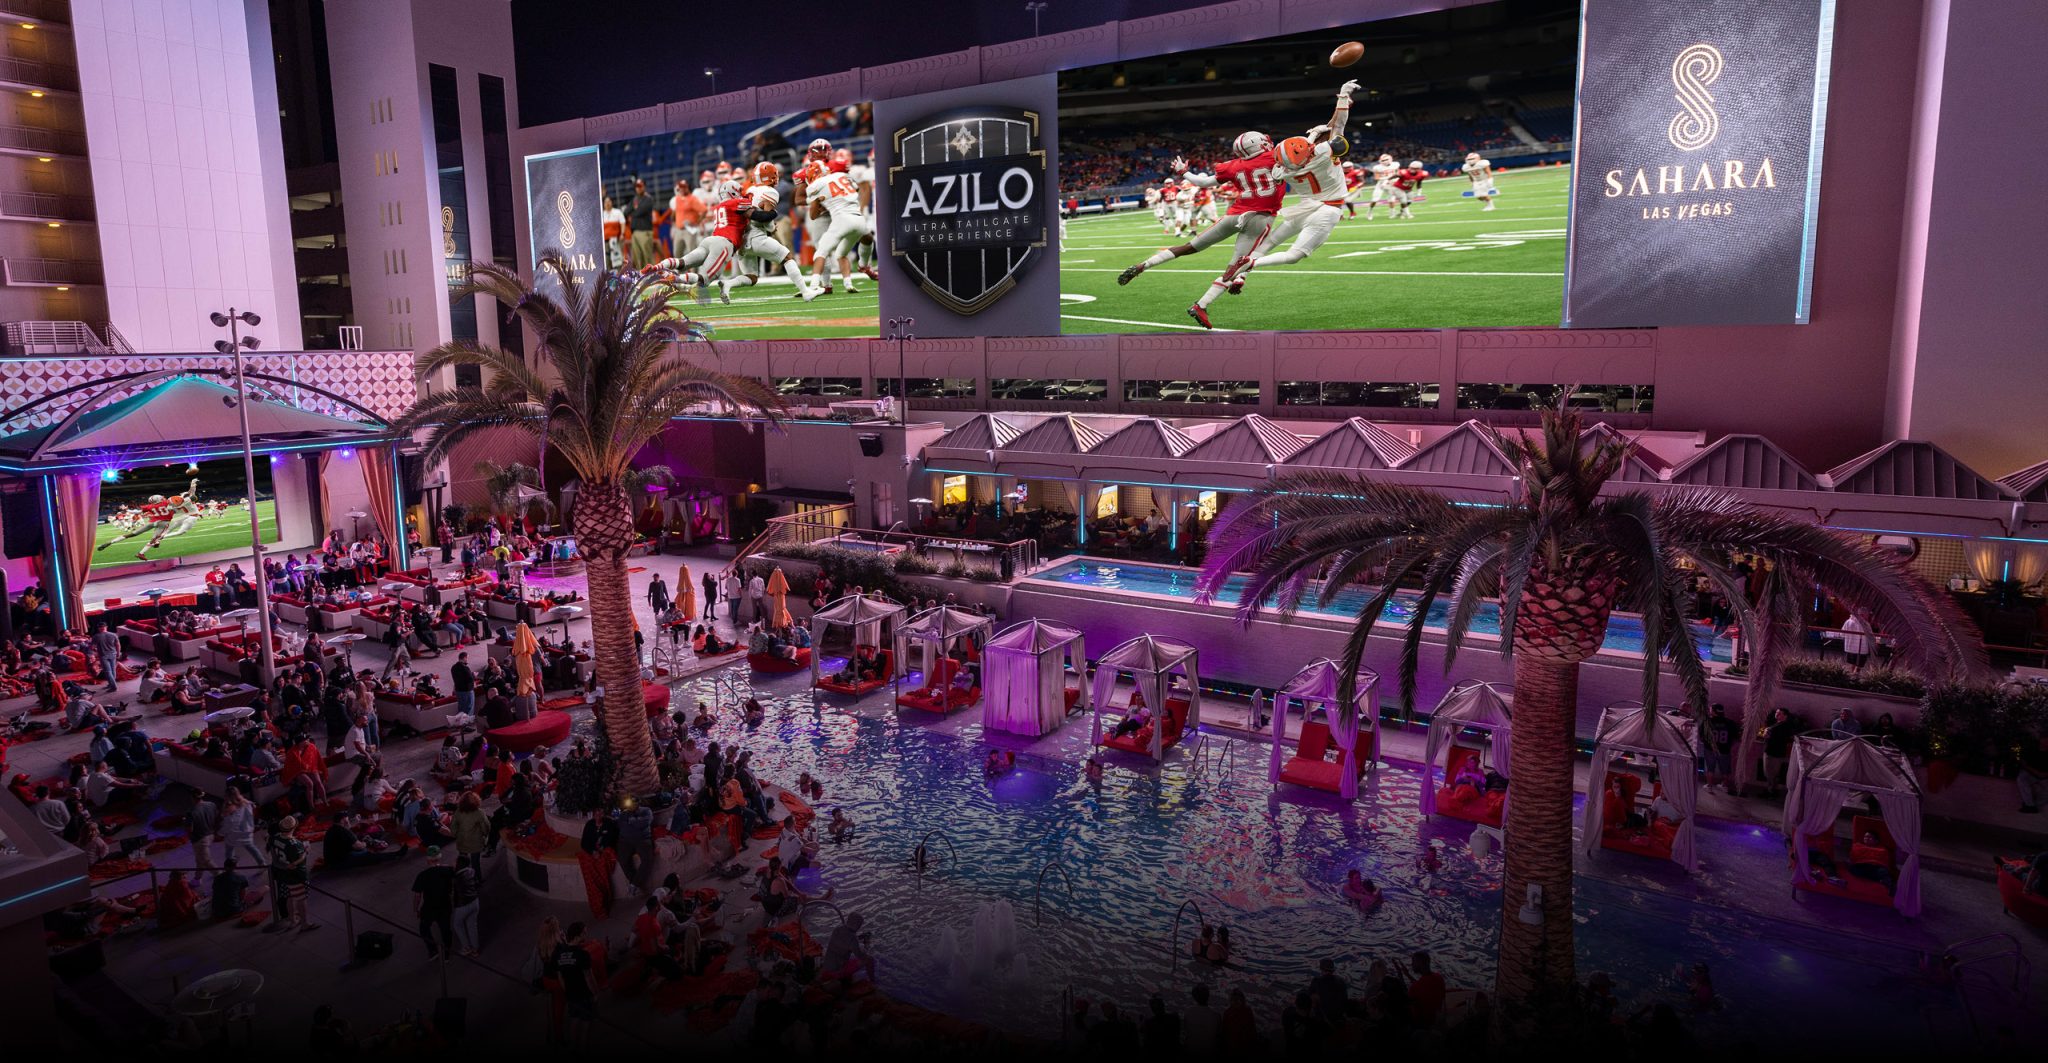 AZILO Las Vegas showing sports on the big screens